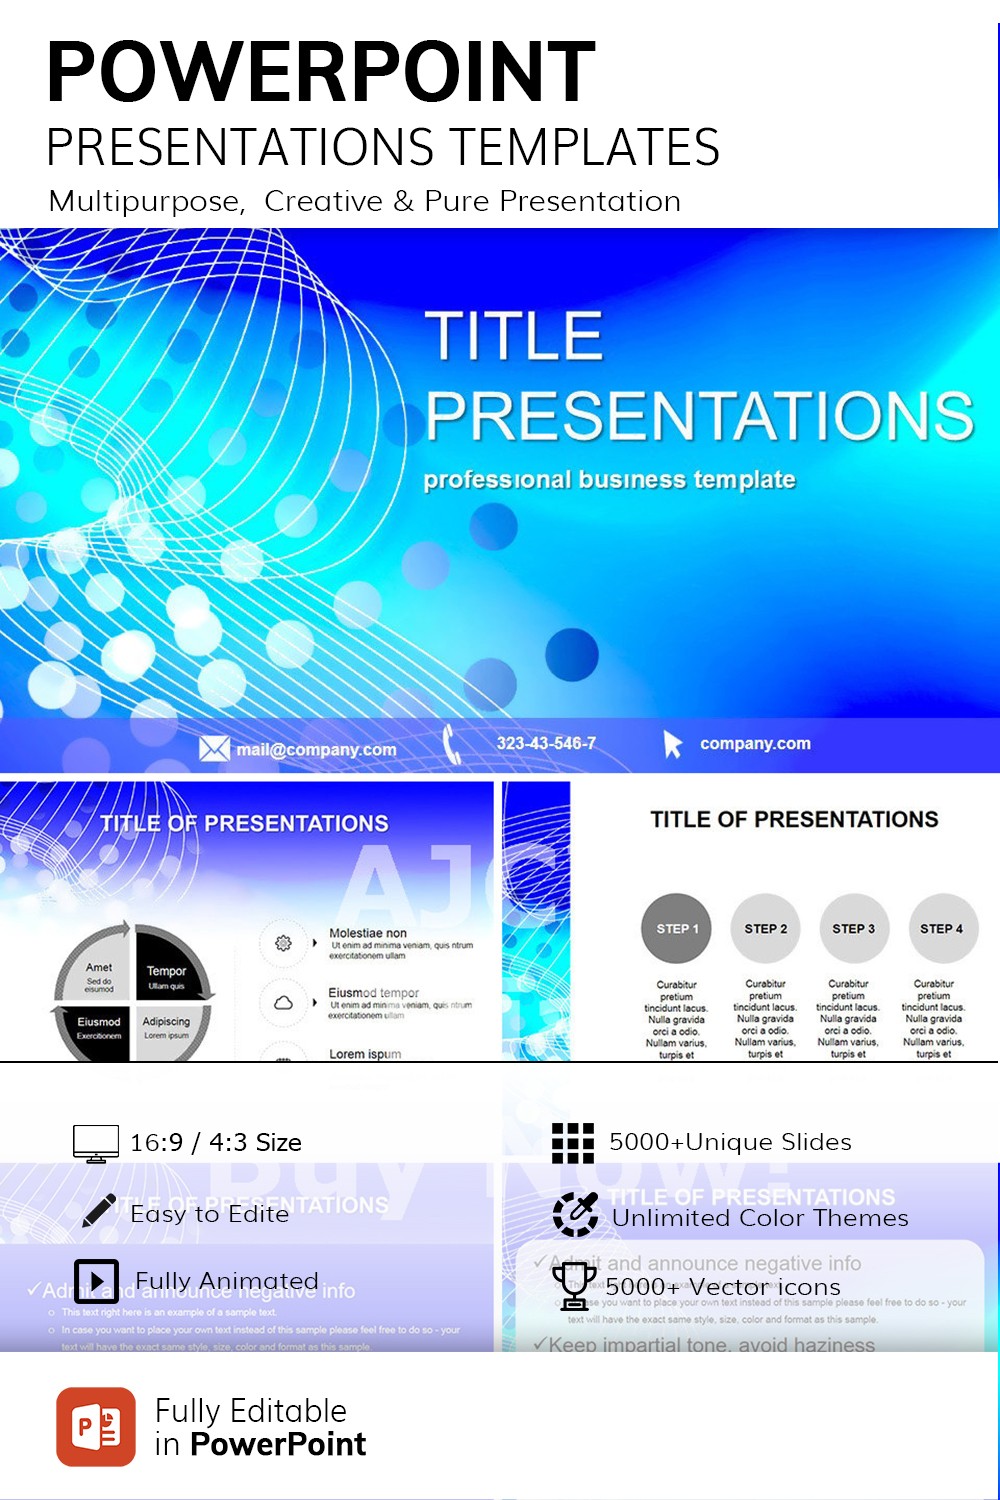 Azure PowerPoint templates | ImagineLayout.com